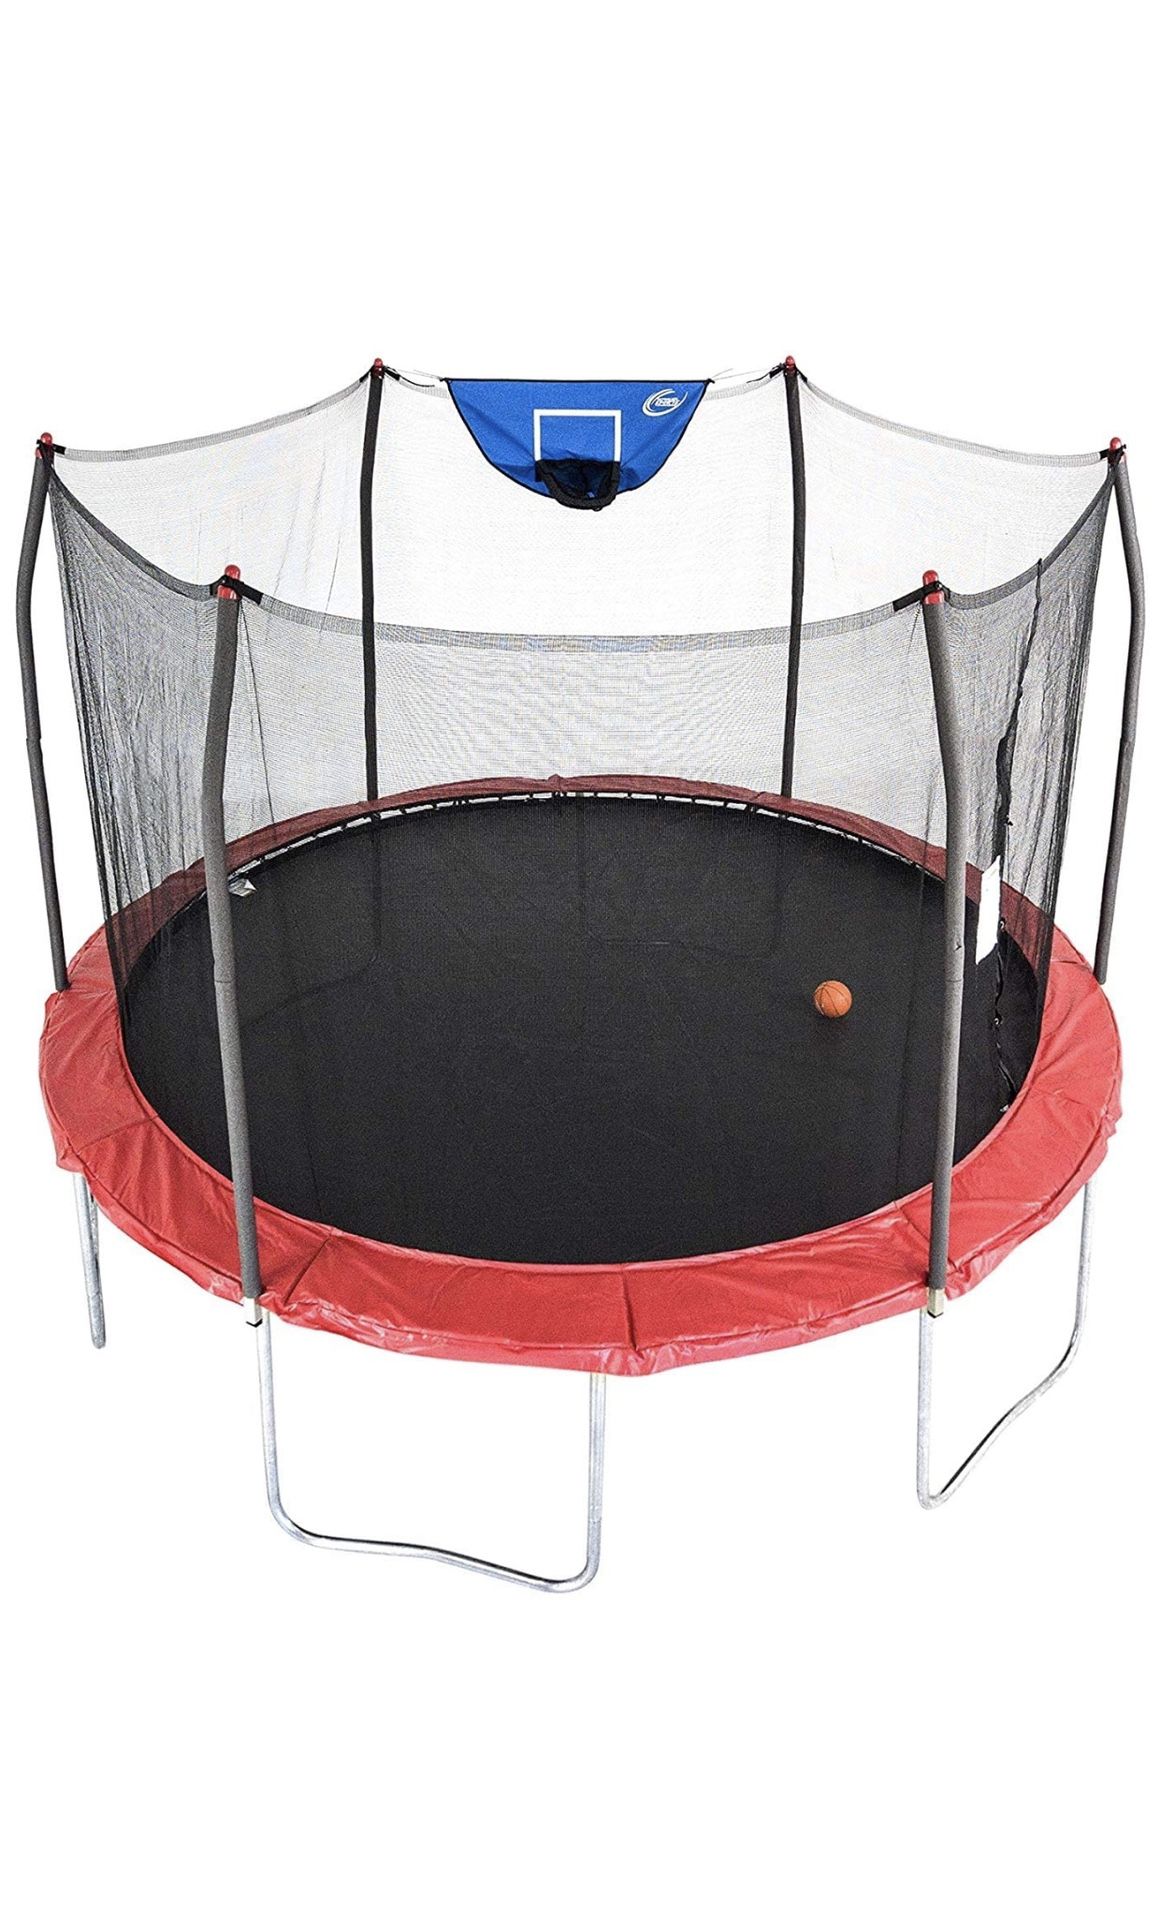 Skywalker 12’ trampoline with basketball hoop and safety enclosure